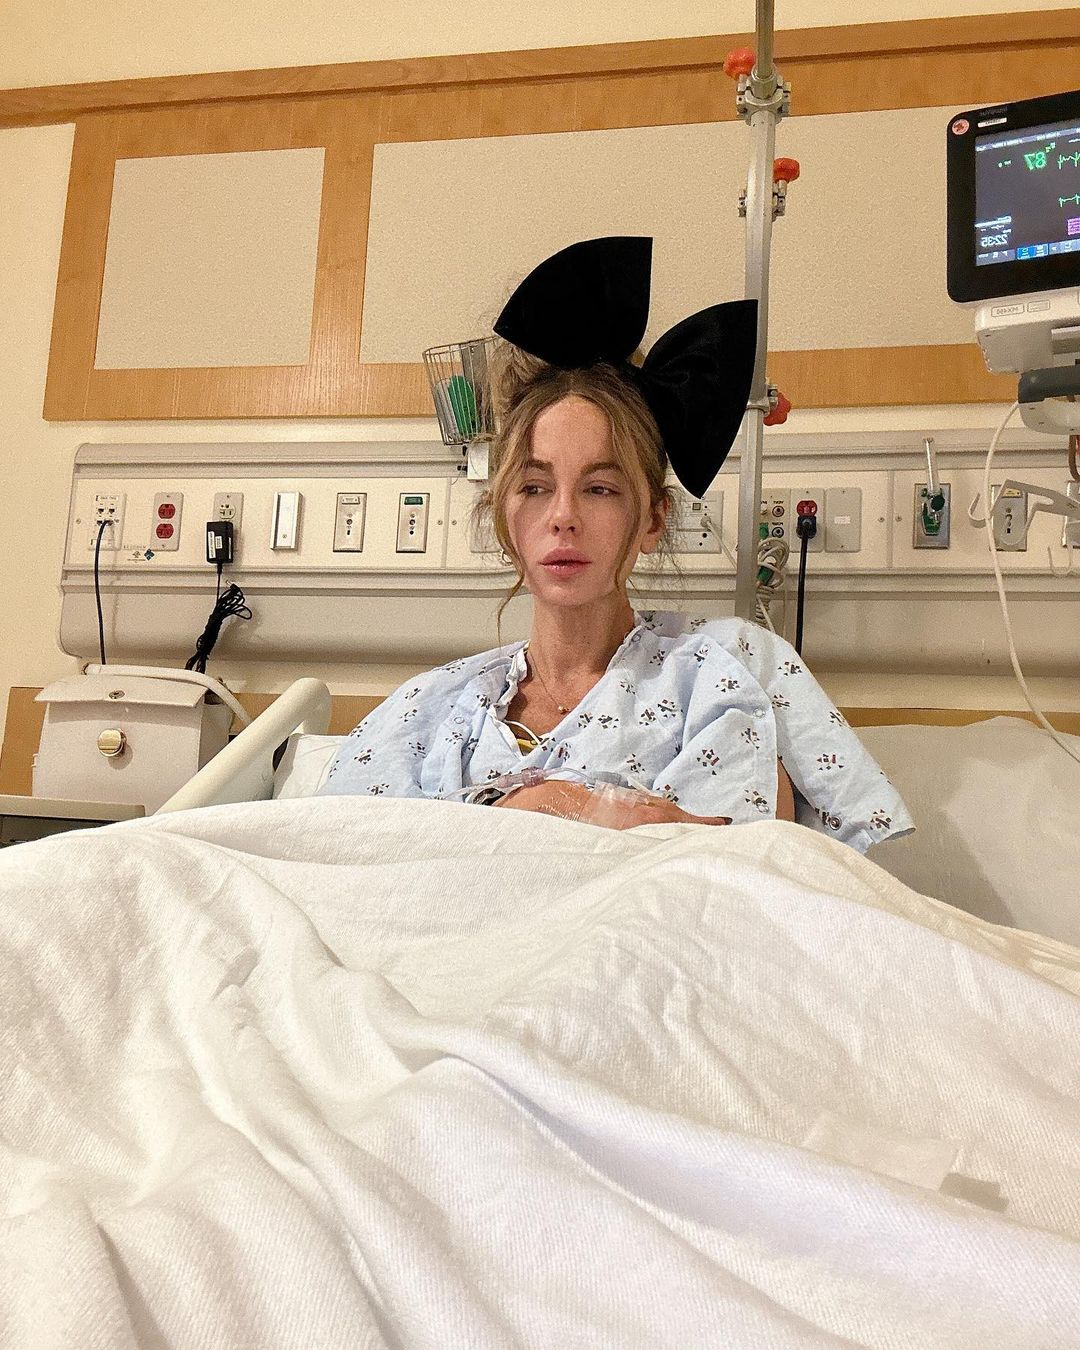 Кейт Бекинсейл госпитализирована: актриса опубликовала фото из палаты